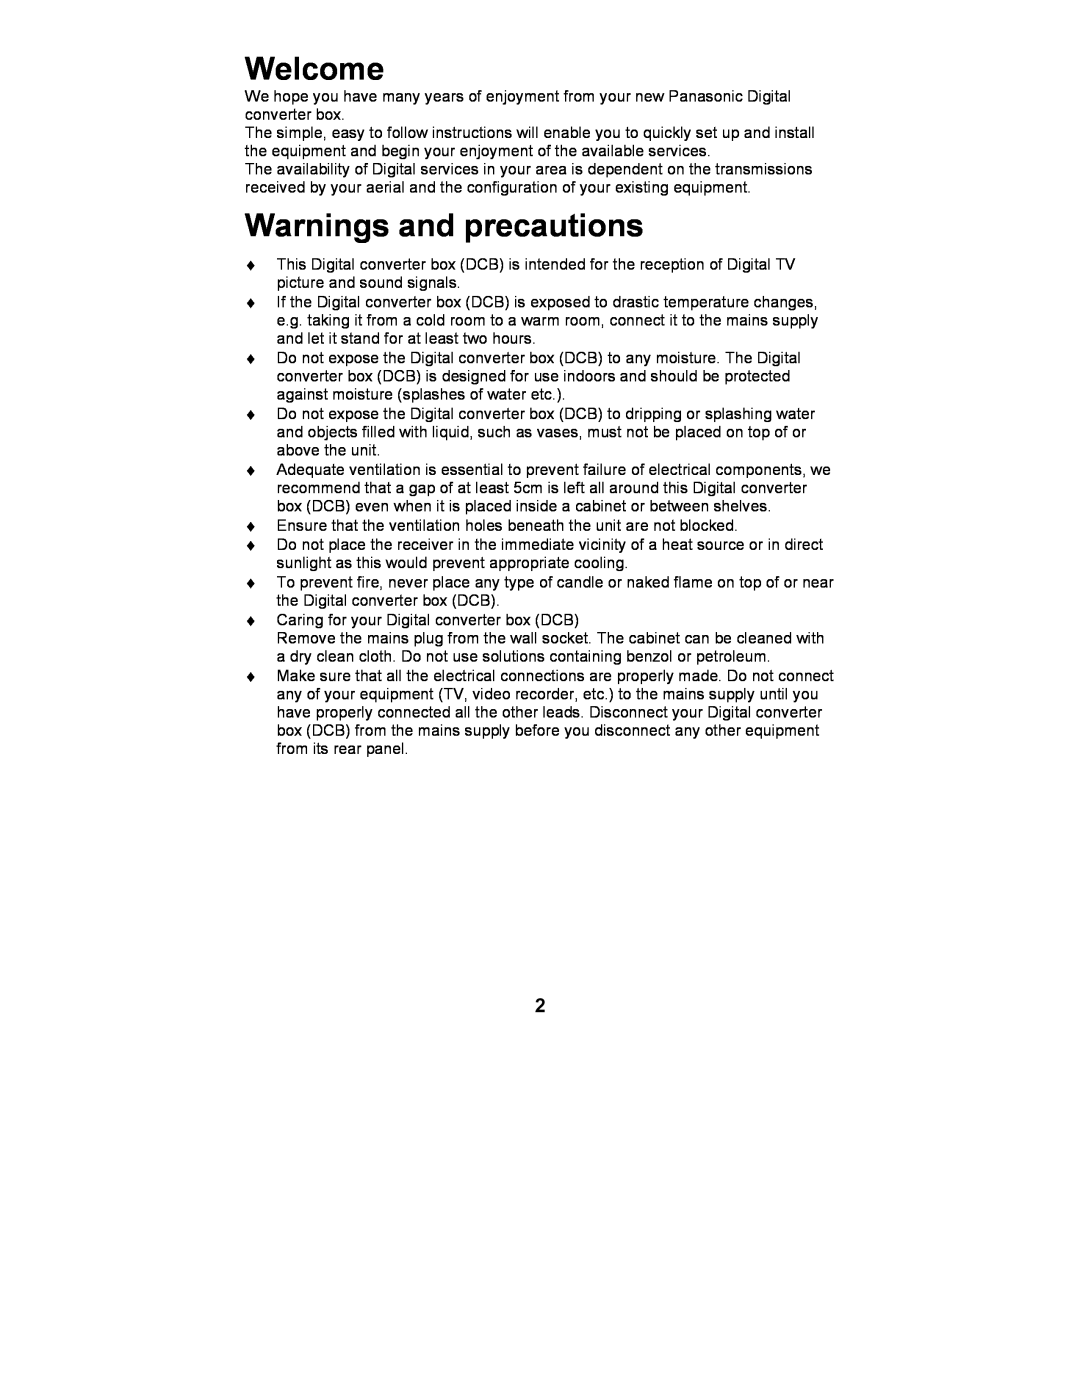 Philips TU-CT20 manual Welcome, Warnings and precautions 